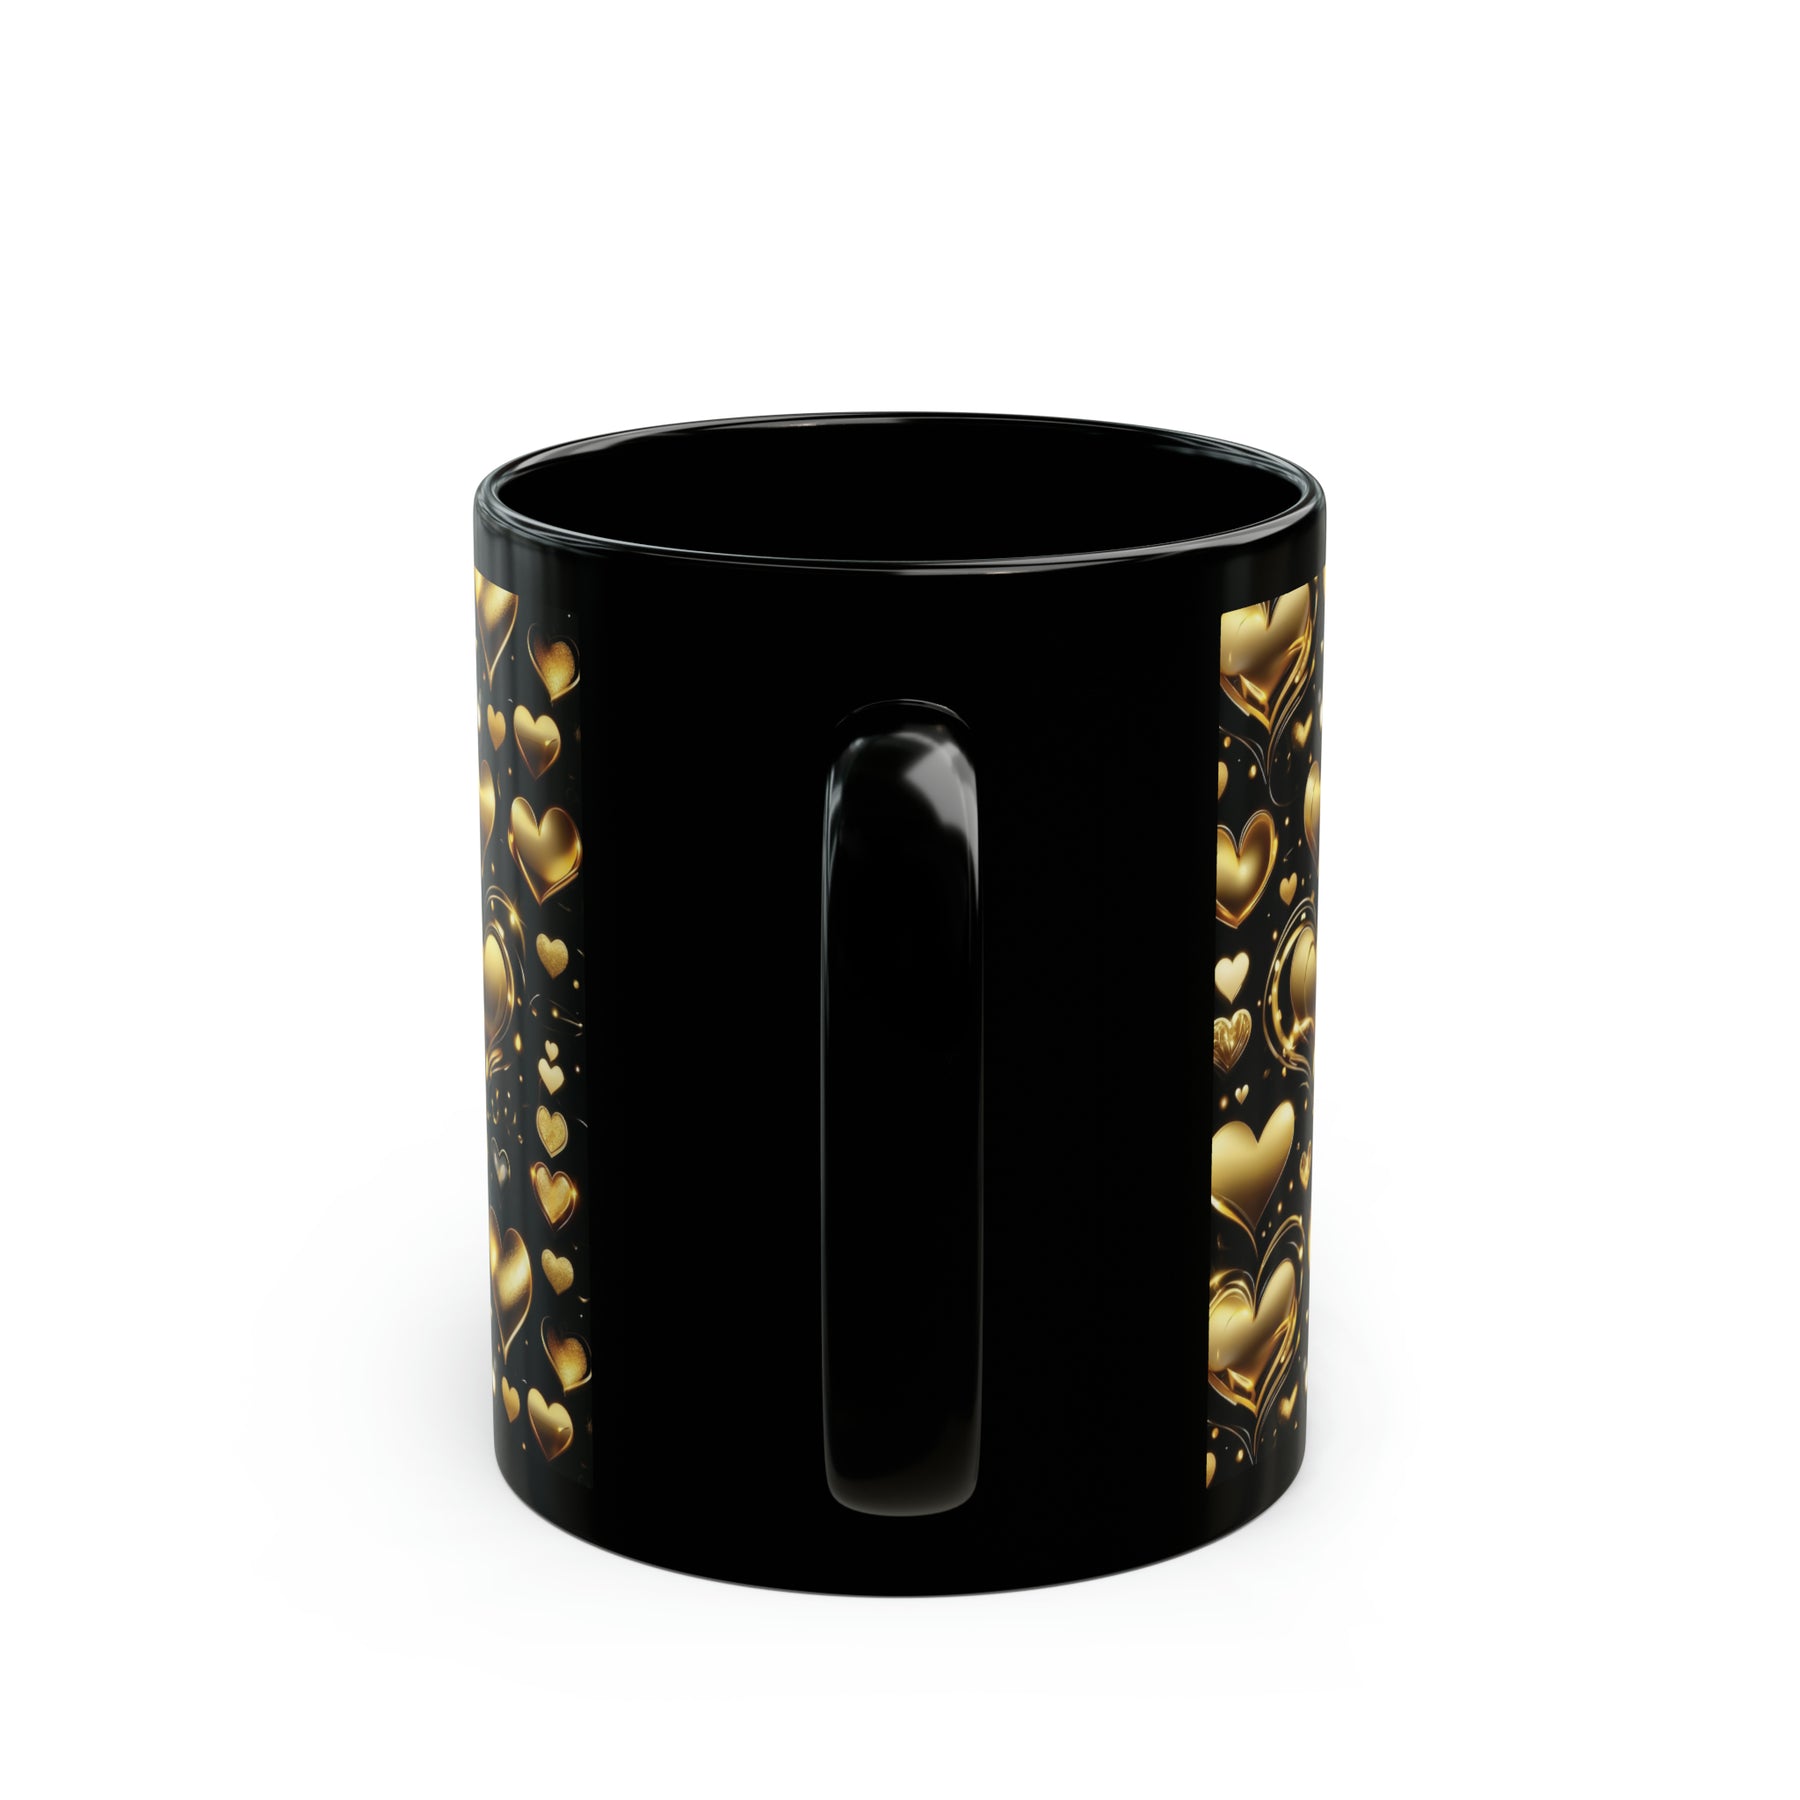 Premium Golden Hearts Black Coffee Mug